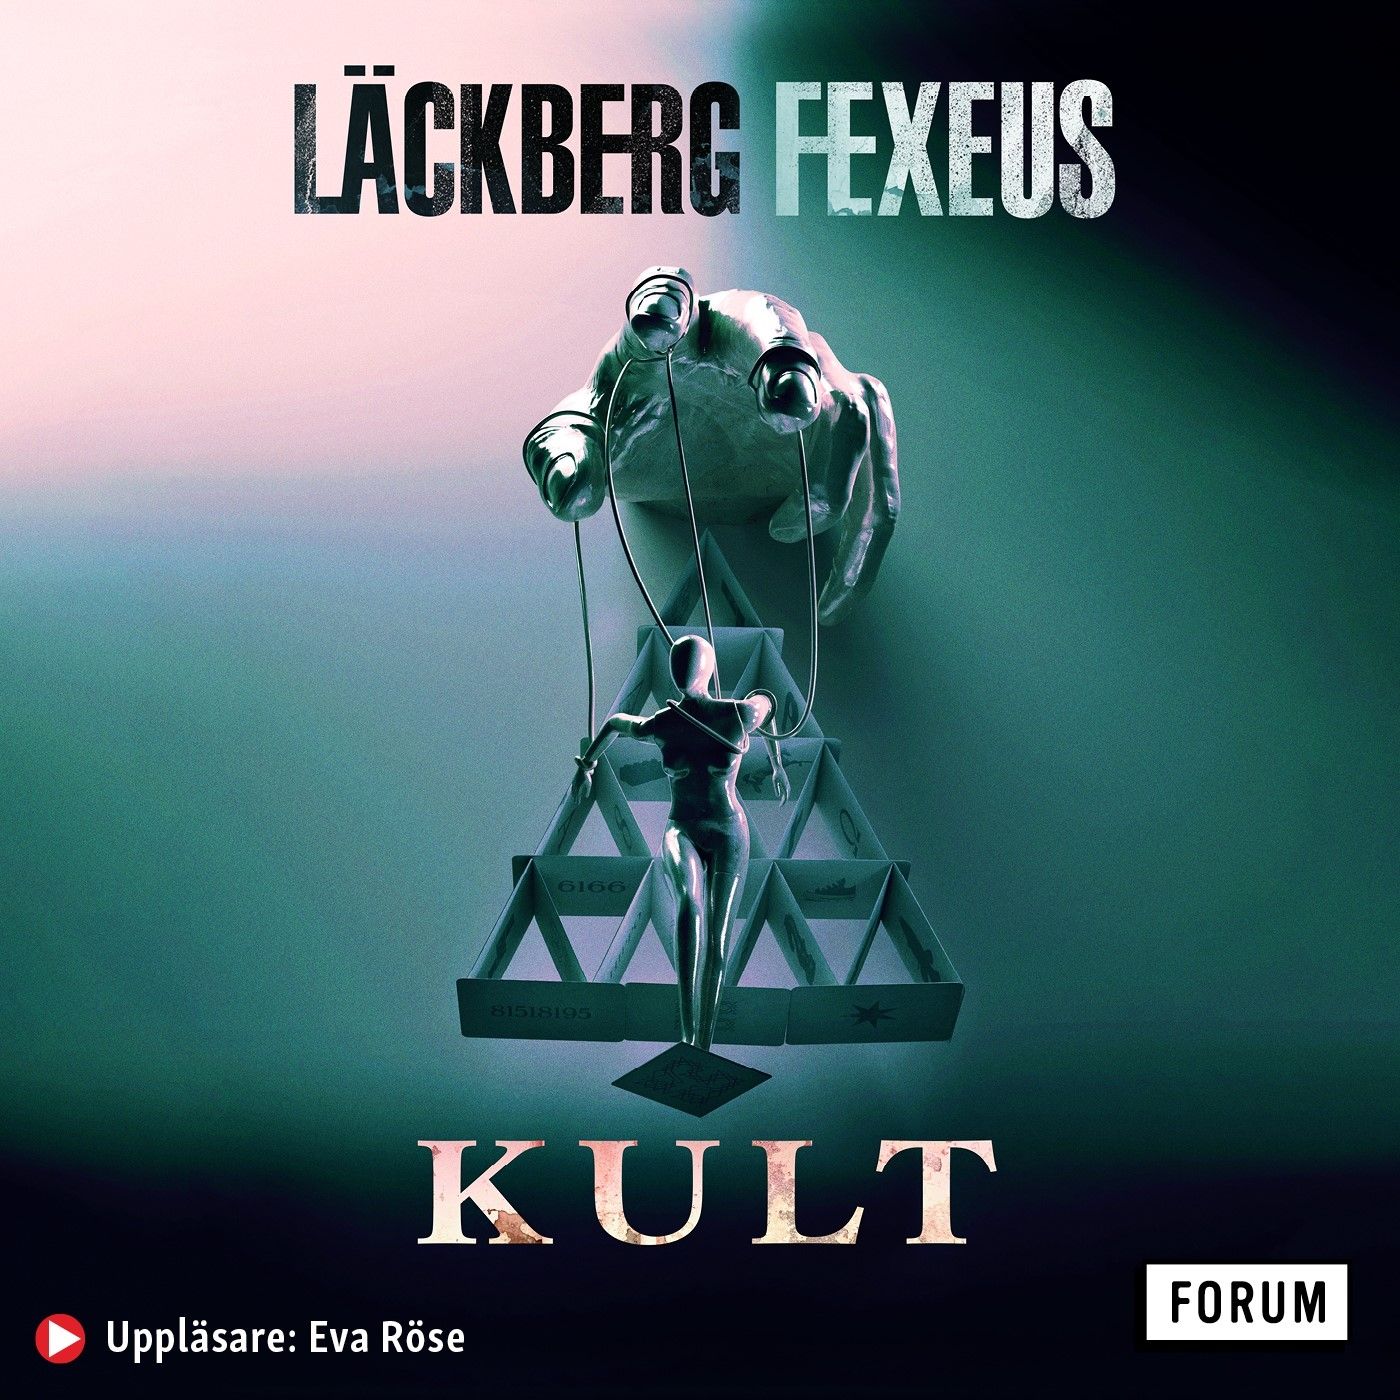 Kult, audiobook by Henrik Fexeus, Camilla Läckberg